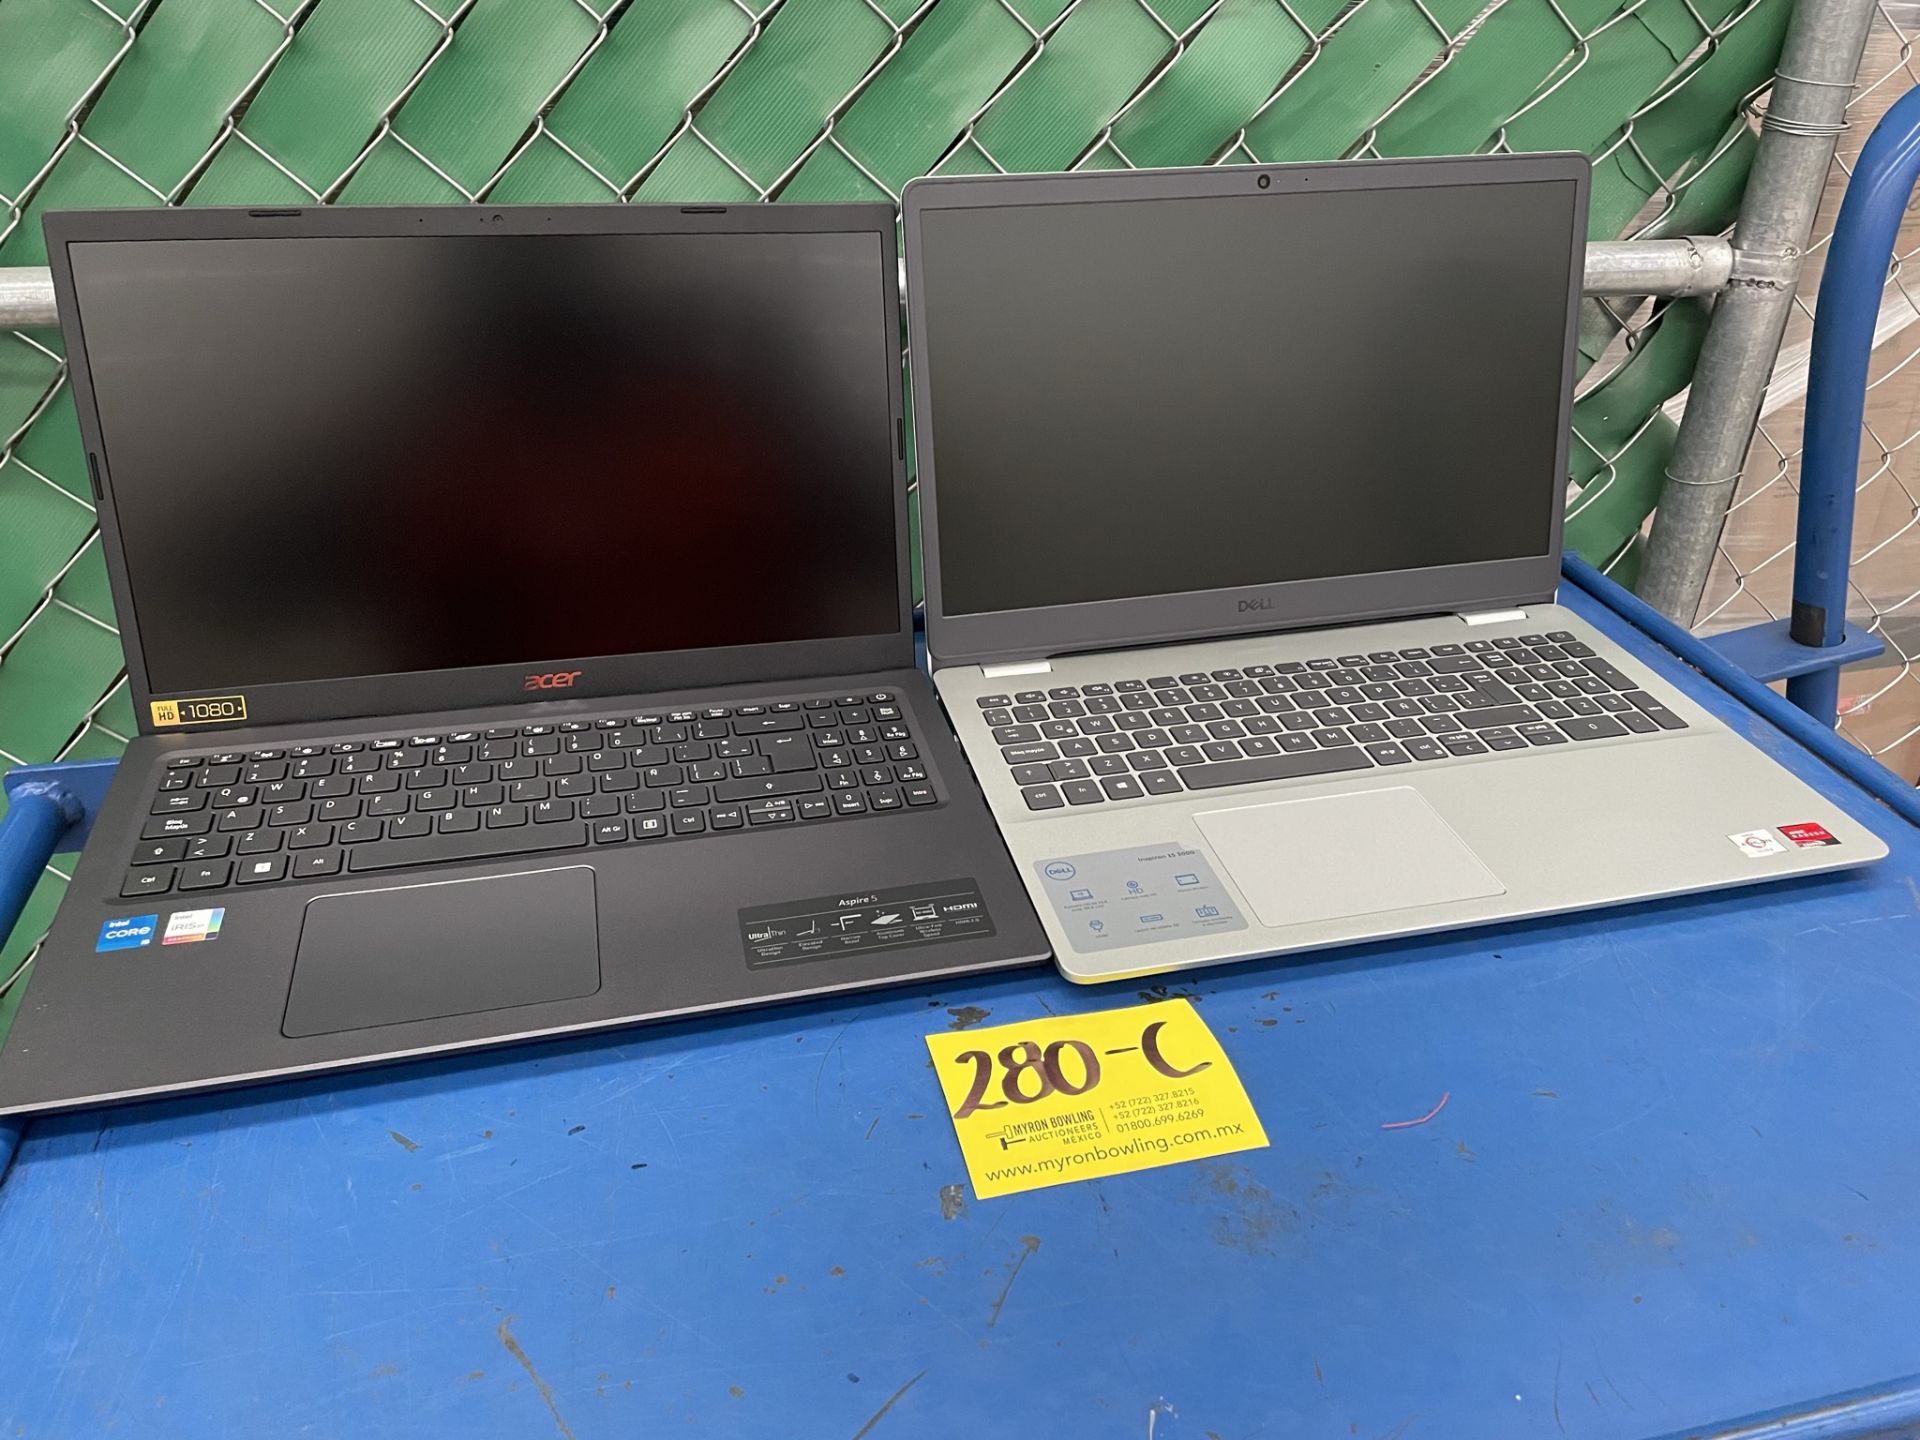 (EQUIPO NUEVO) Lote De 2 Laptops Contiene: 1 Laptop Marca DELL, Modelo I3505, Serie N/D, SO WINDOWS - Image 3 of 9